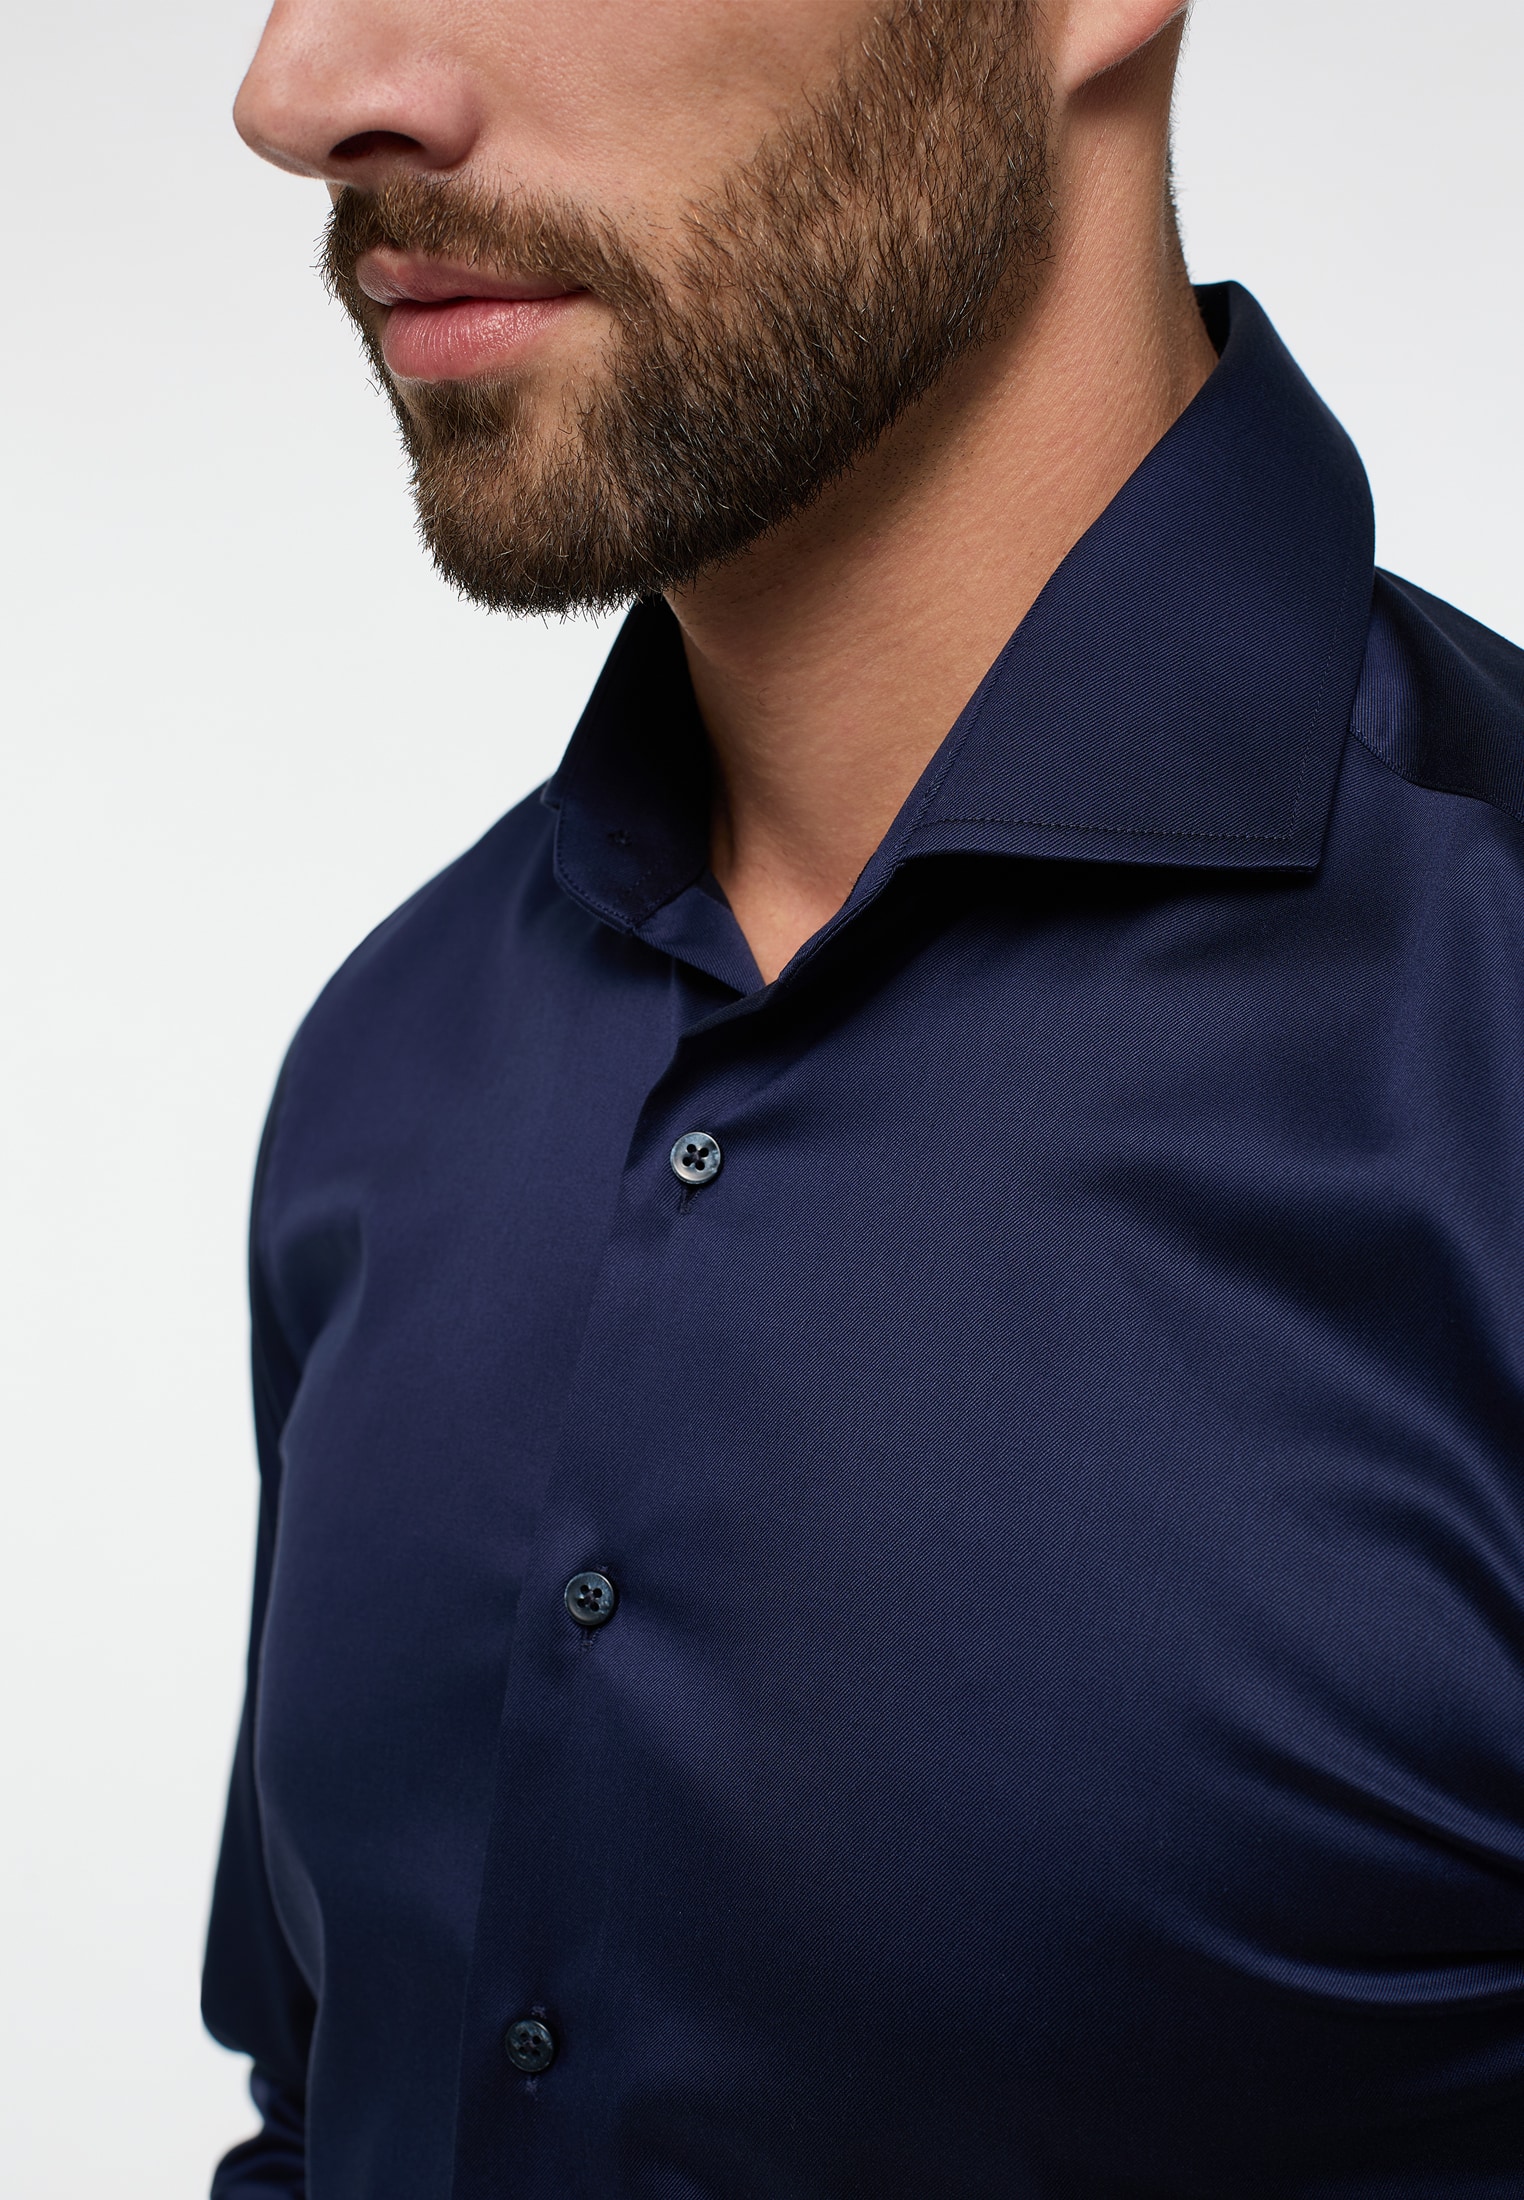 SLIM FIT Luxury Shirt in dunkelblau unifarben | dunkelblau | 44 | Langarm |  1SH04299-01-81-44-1/1